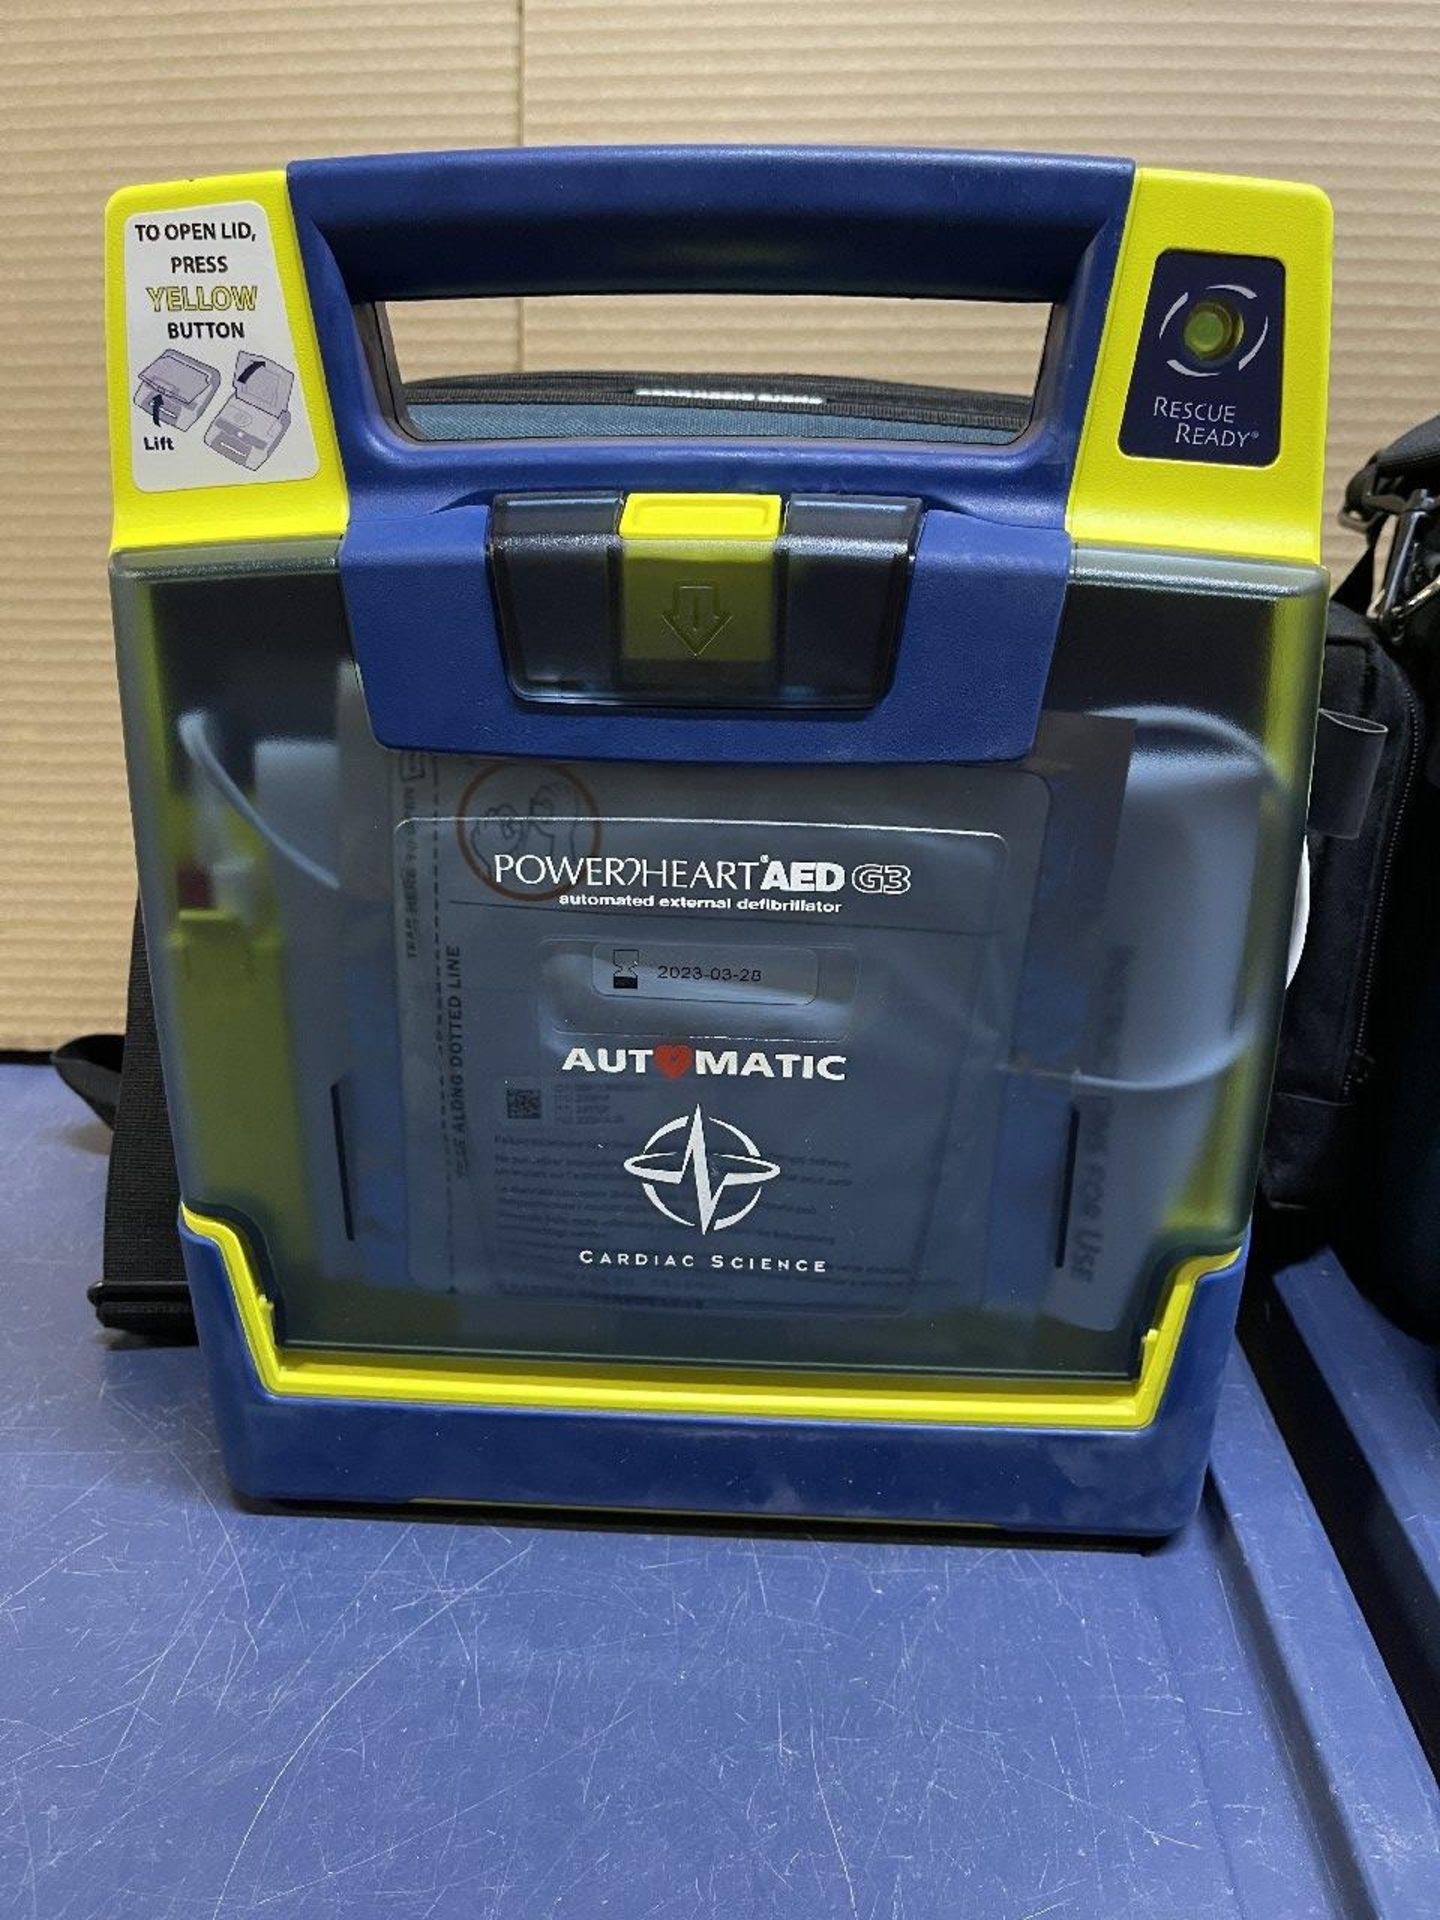 Cardiac Science Powerheart AED G3 Defibrillators - Image 3 of 6